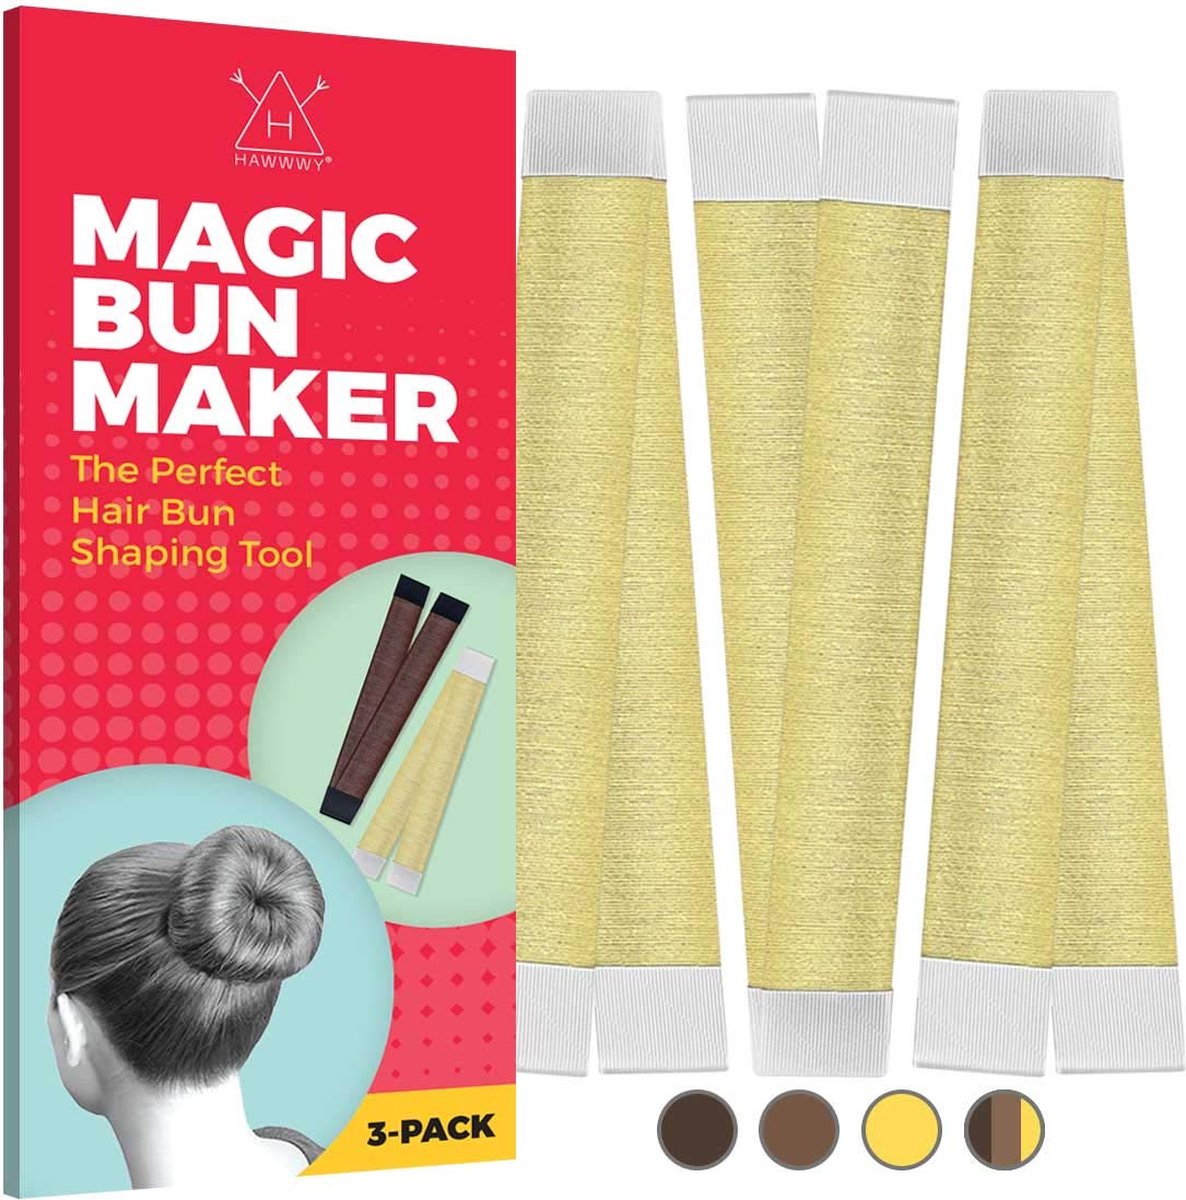 Magic Bun Maker